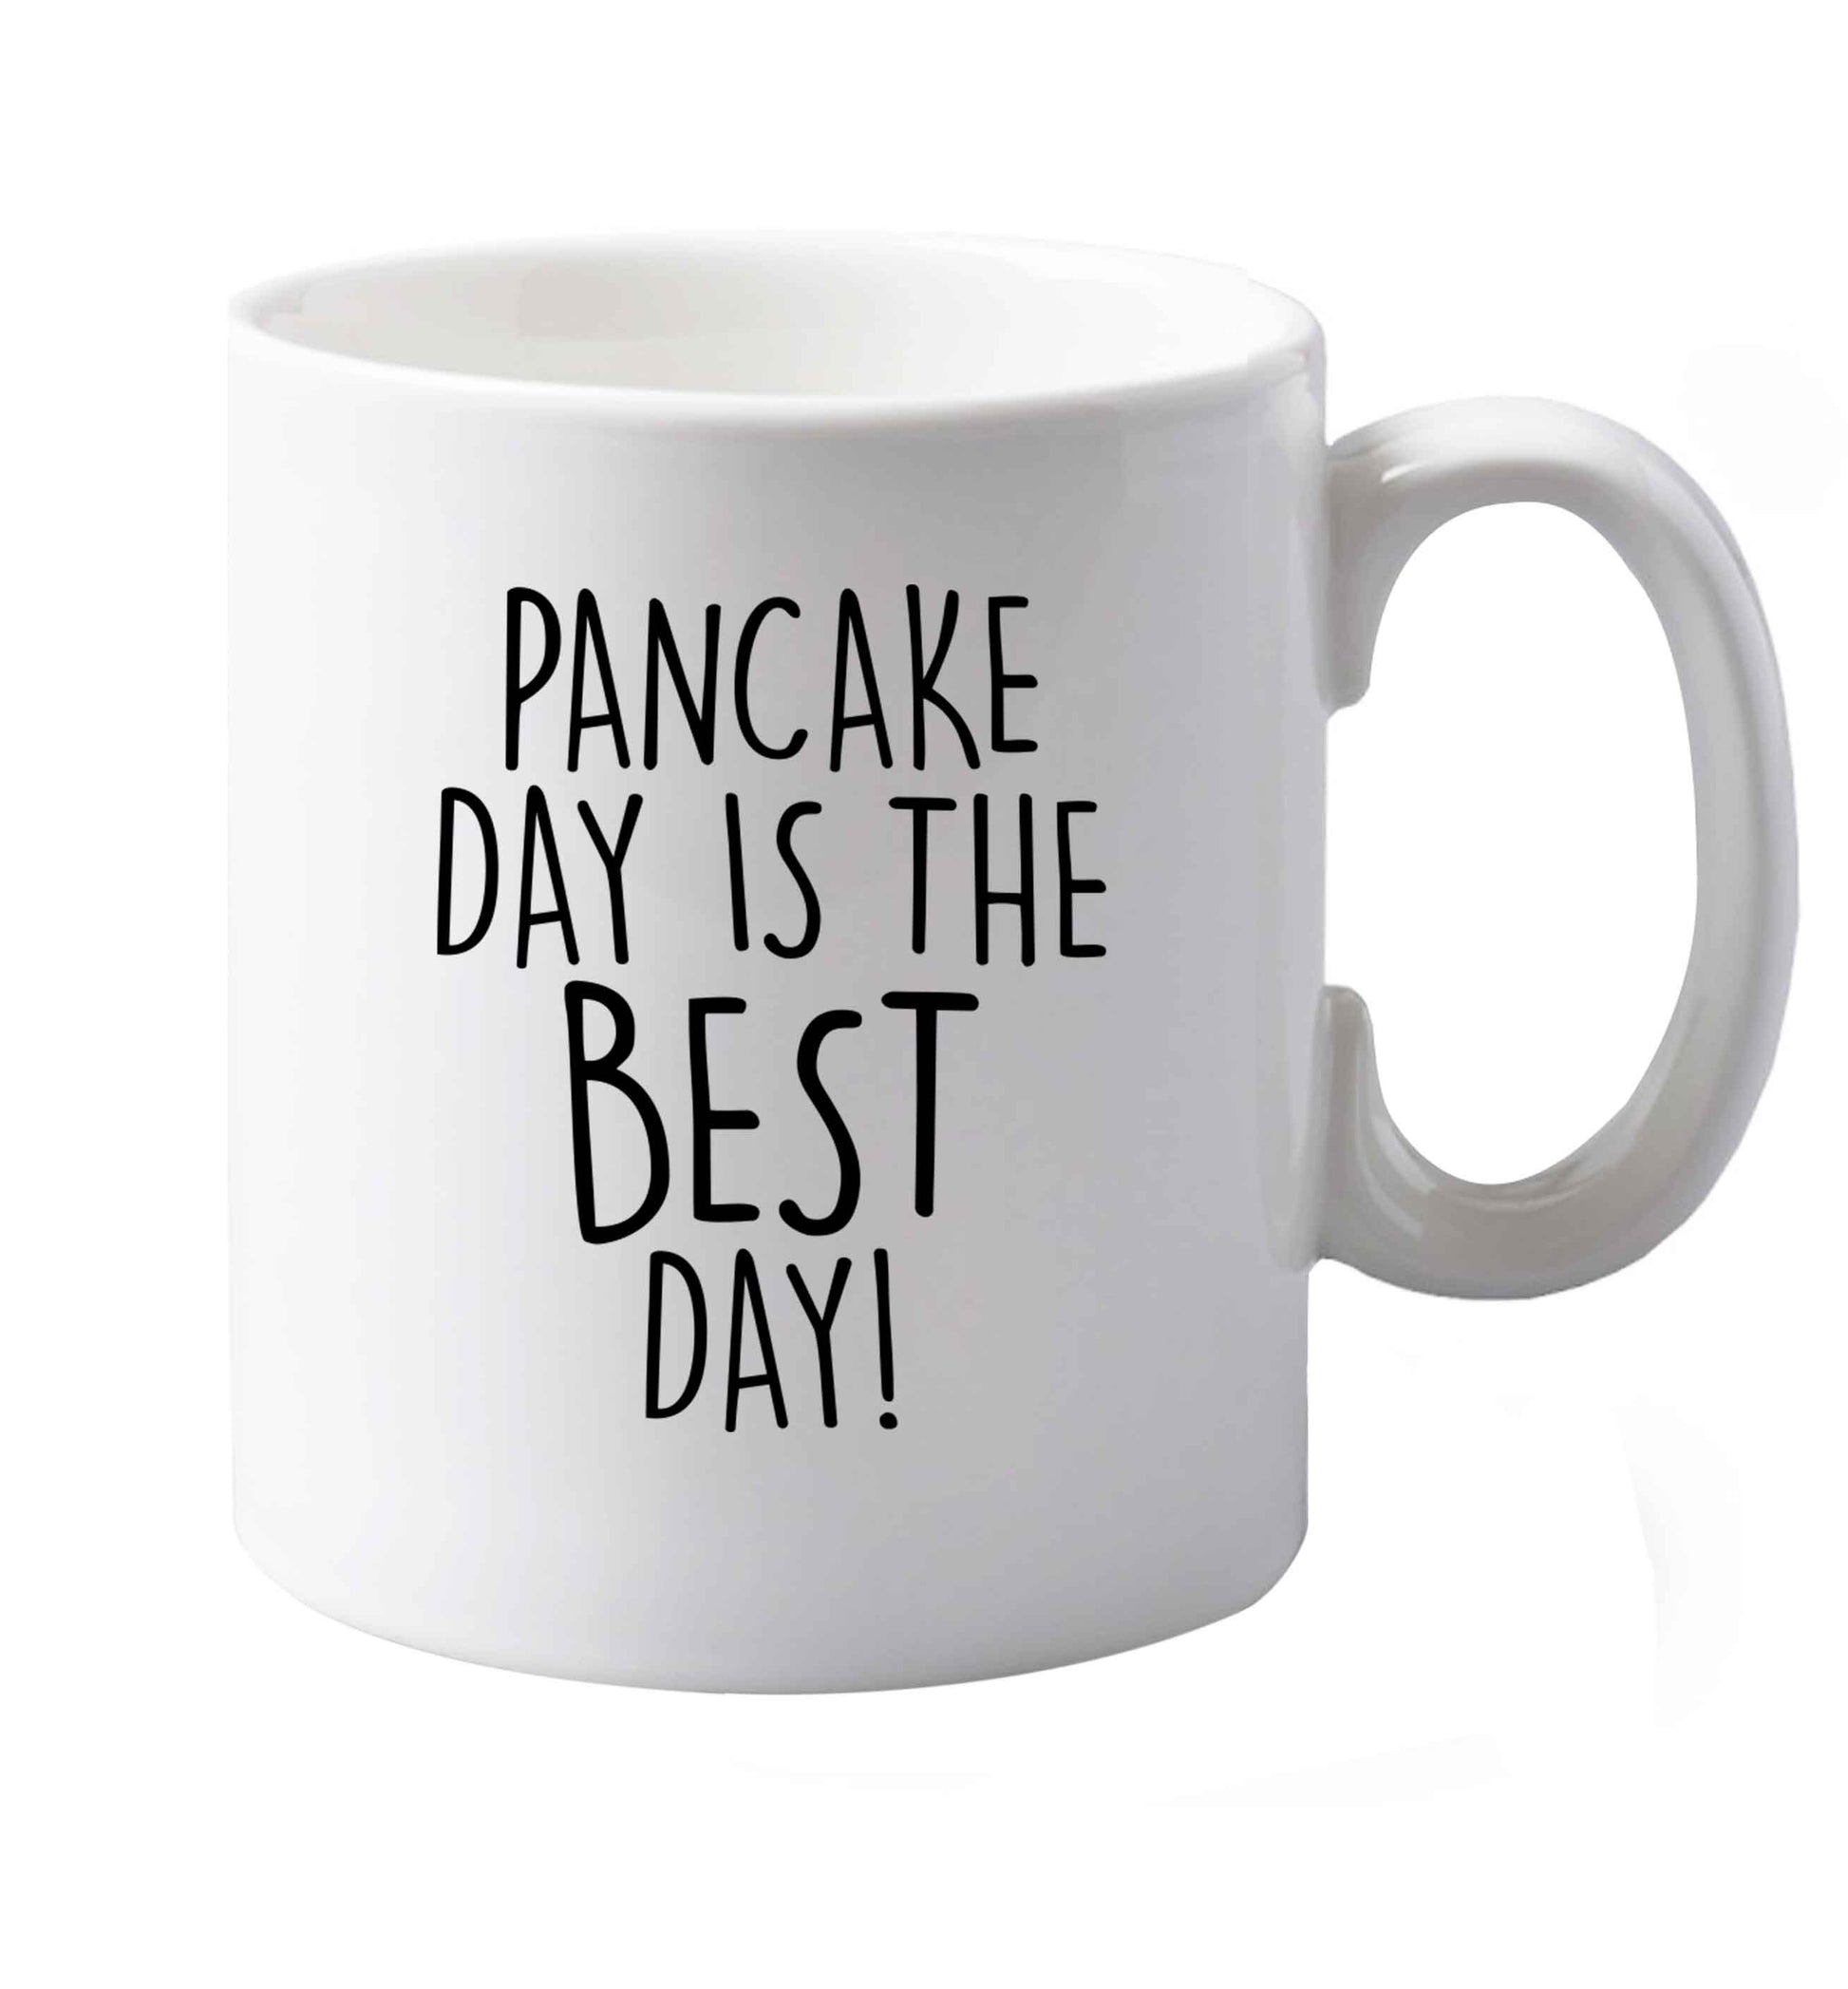 10 oz Pancake Day is the Best Day ceramic mug both sides